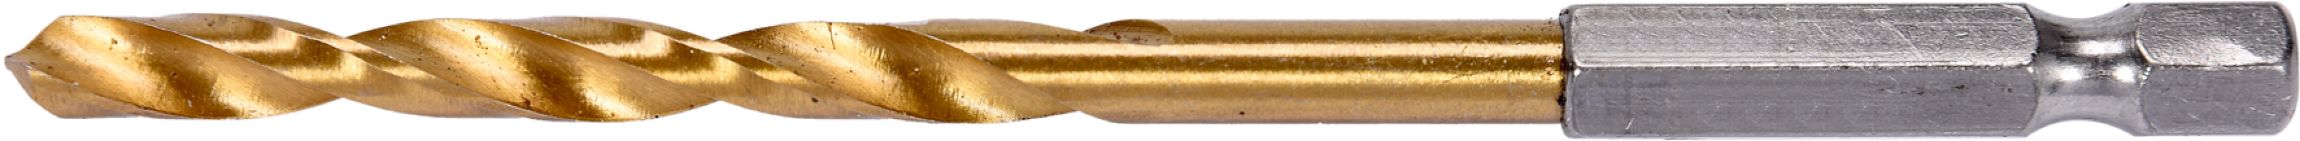 Vrtk do kovu HSS-titan 6,5mm se estihranou stopkou 1/4" Yato YT-44765